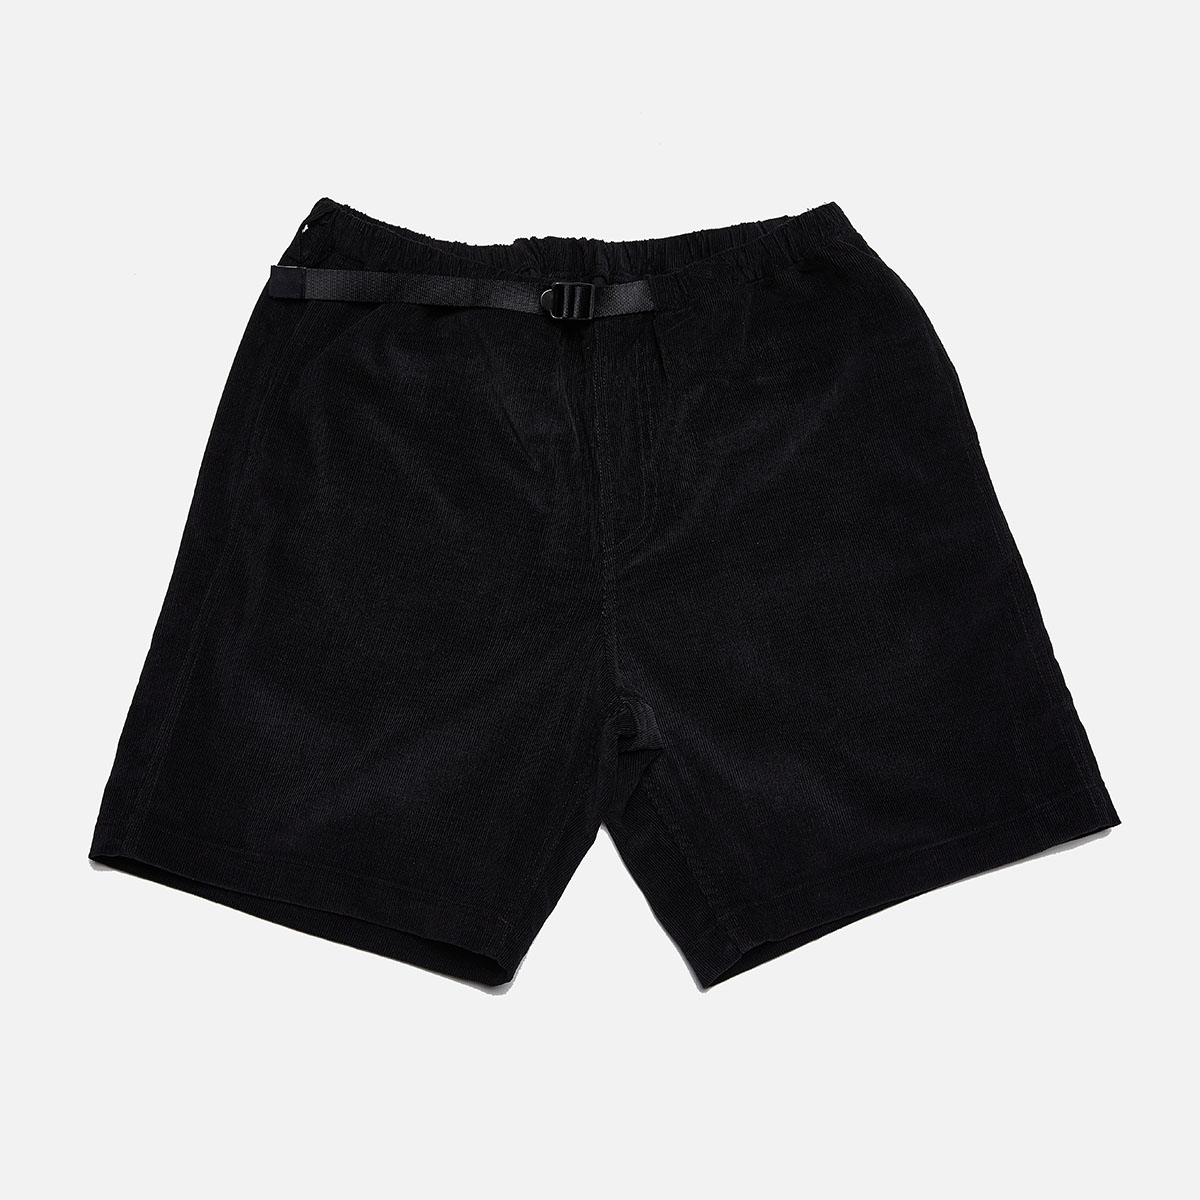 Cord shorts[black]